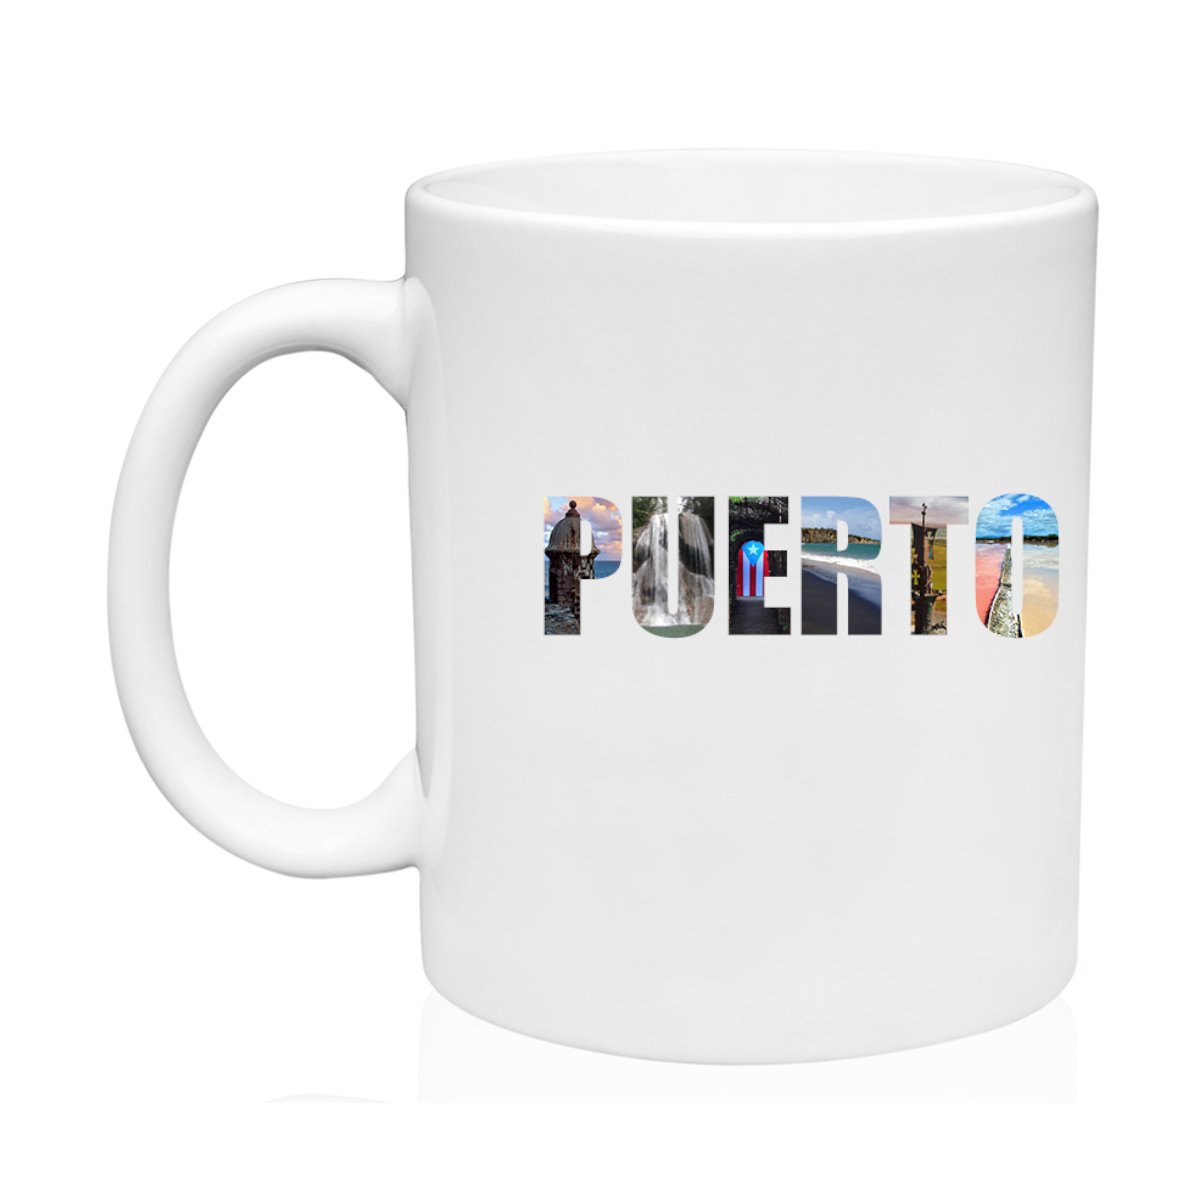 AGAD Puerto Rico (Letras PR island Ceramic Mug)